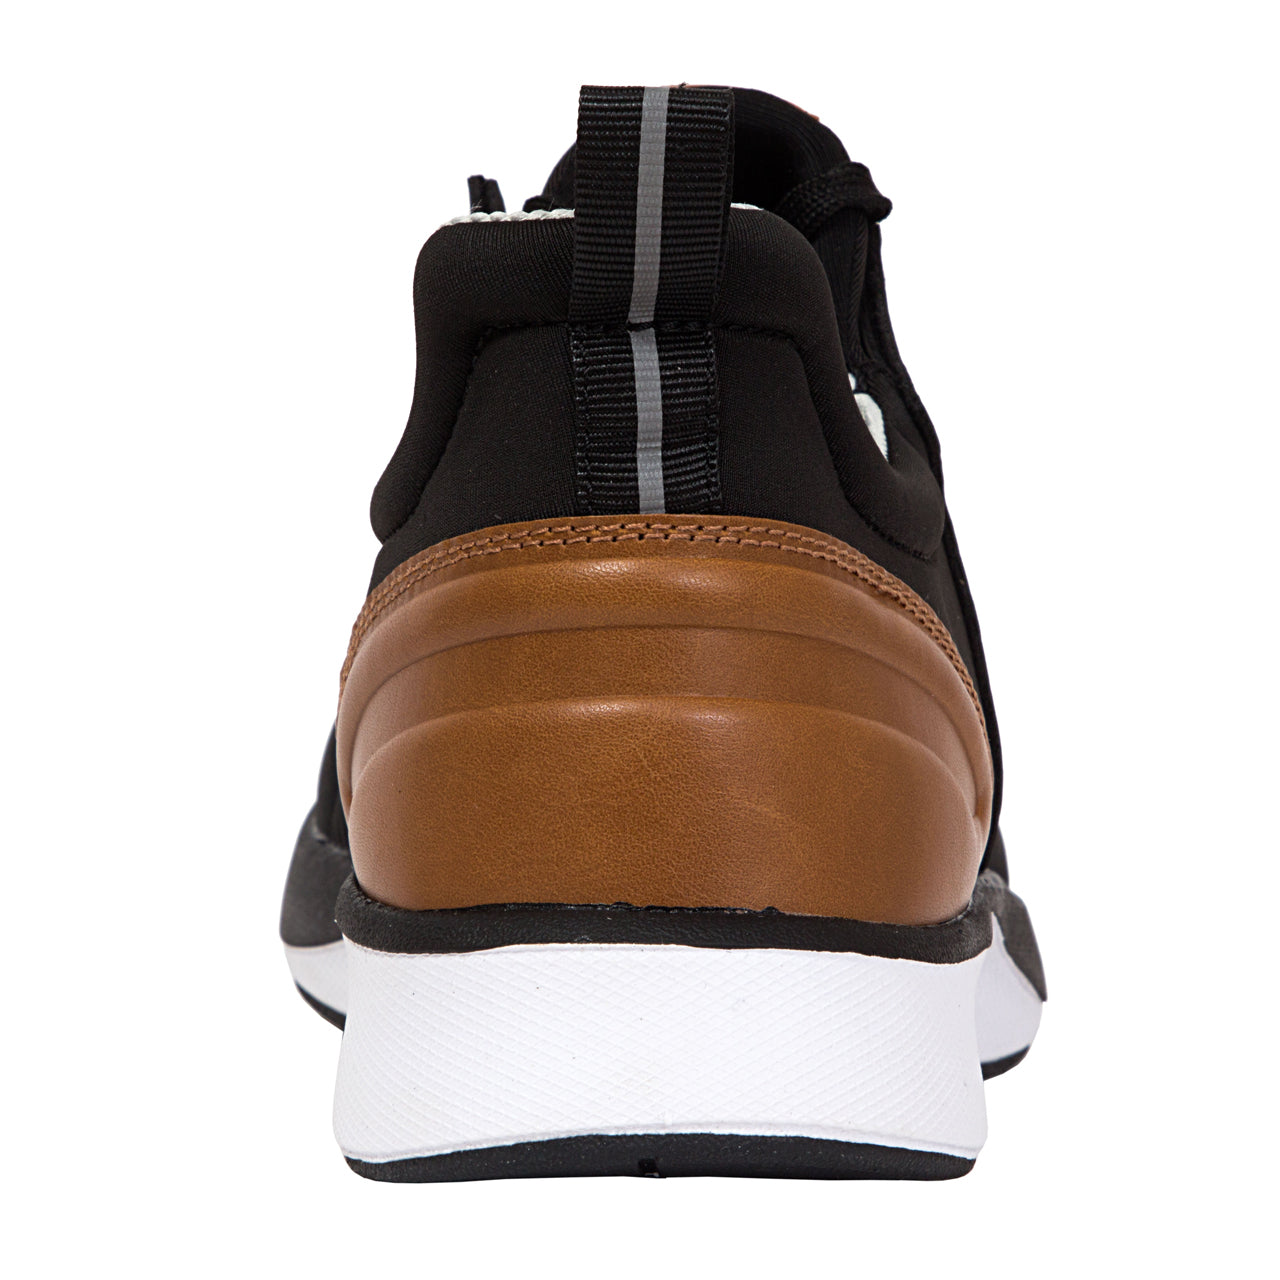 Deer Stags Men's Cranston Water-repellant Fashion Sneaker